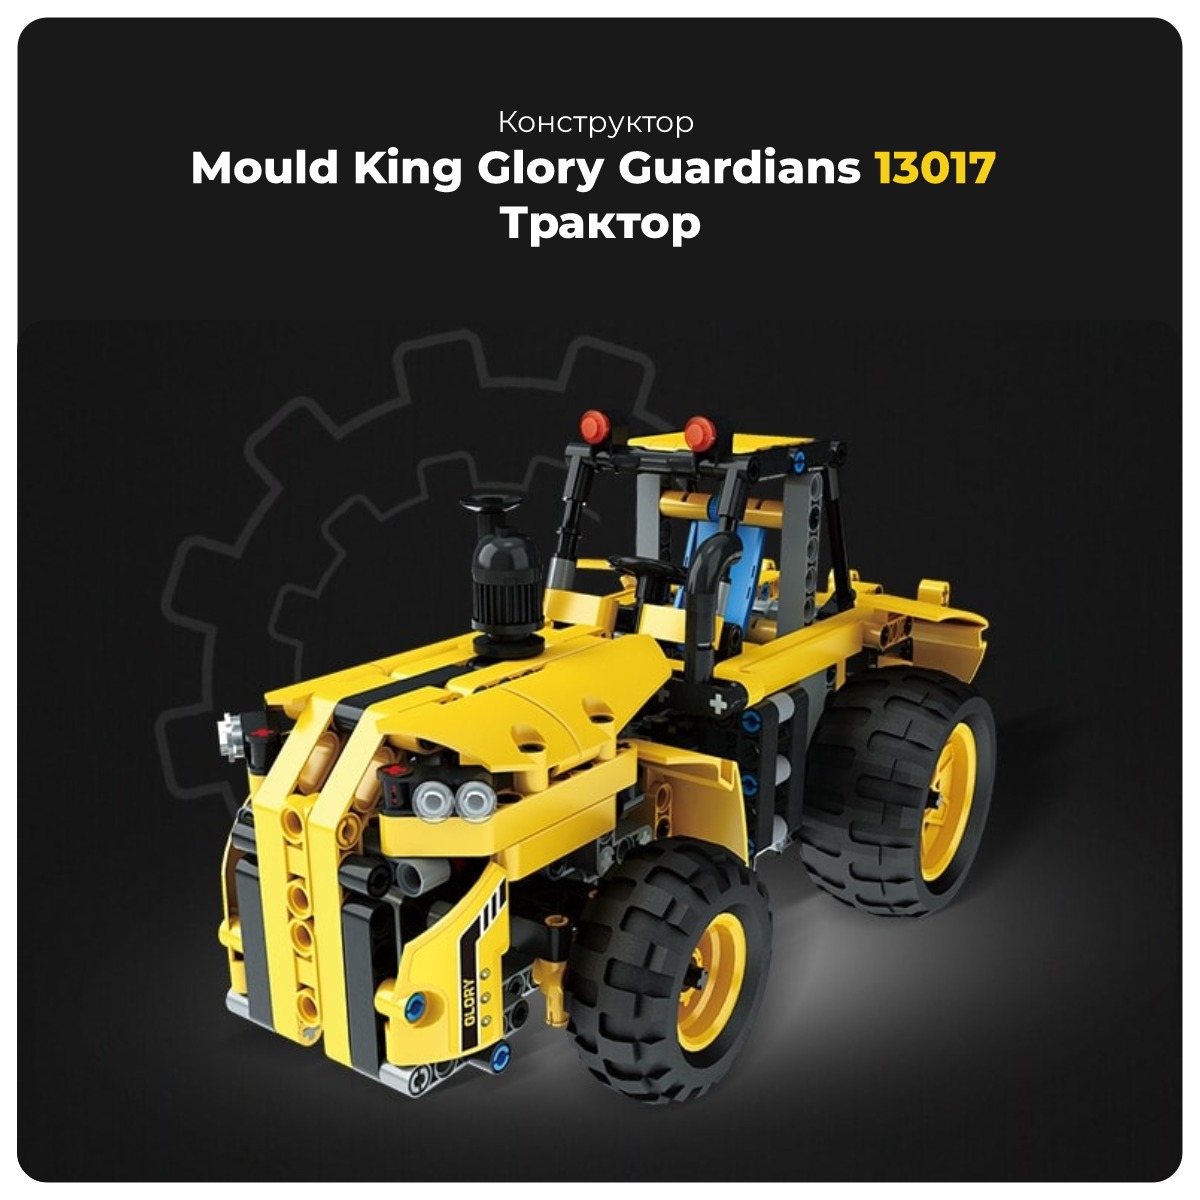 Mould-King-Glory-Guardians-13017-01